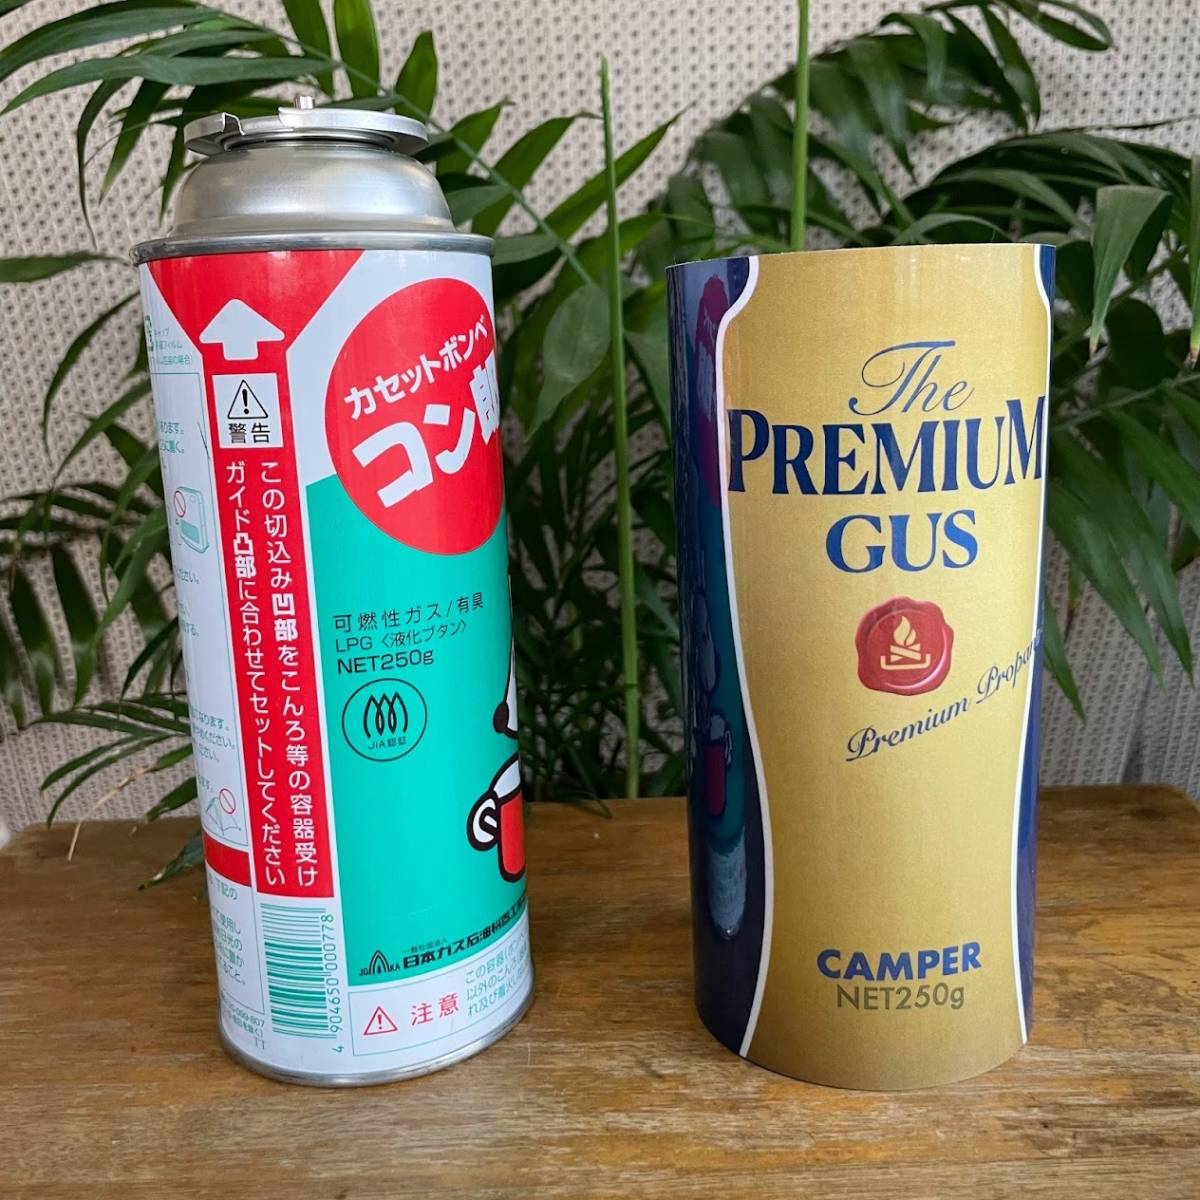 CB缶(カセットガス)マグネットカバー★カンチョール&プレミアムビール